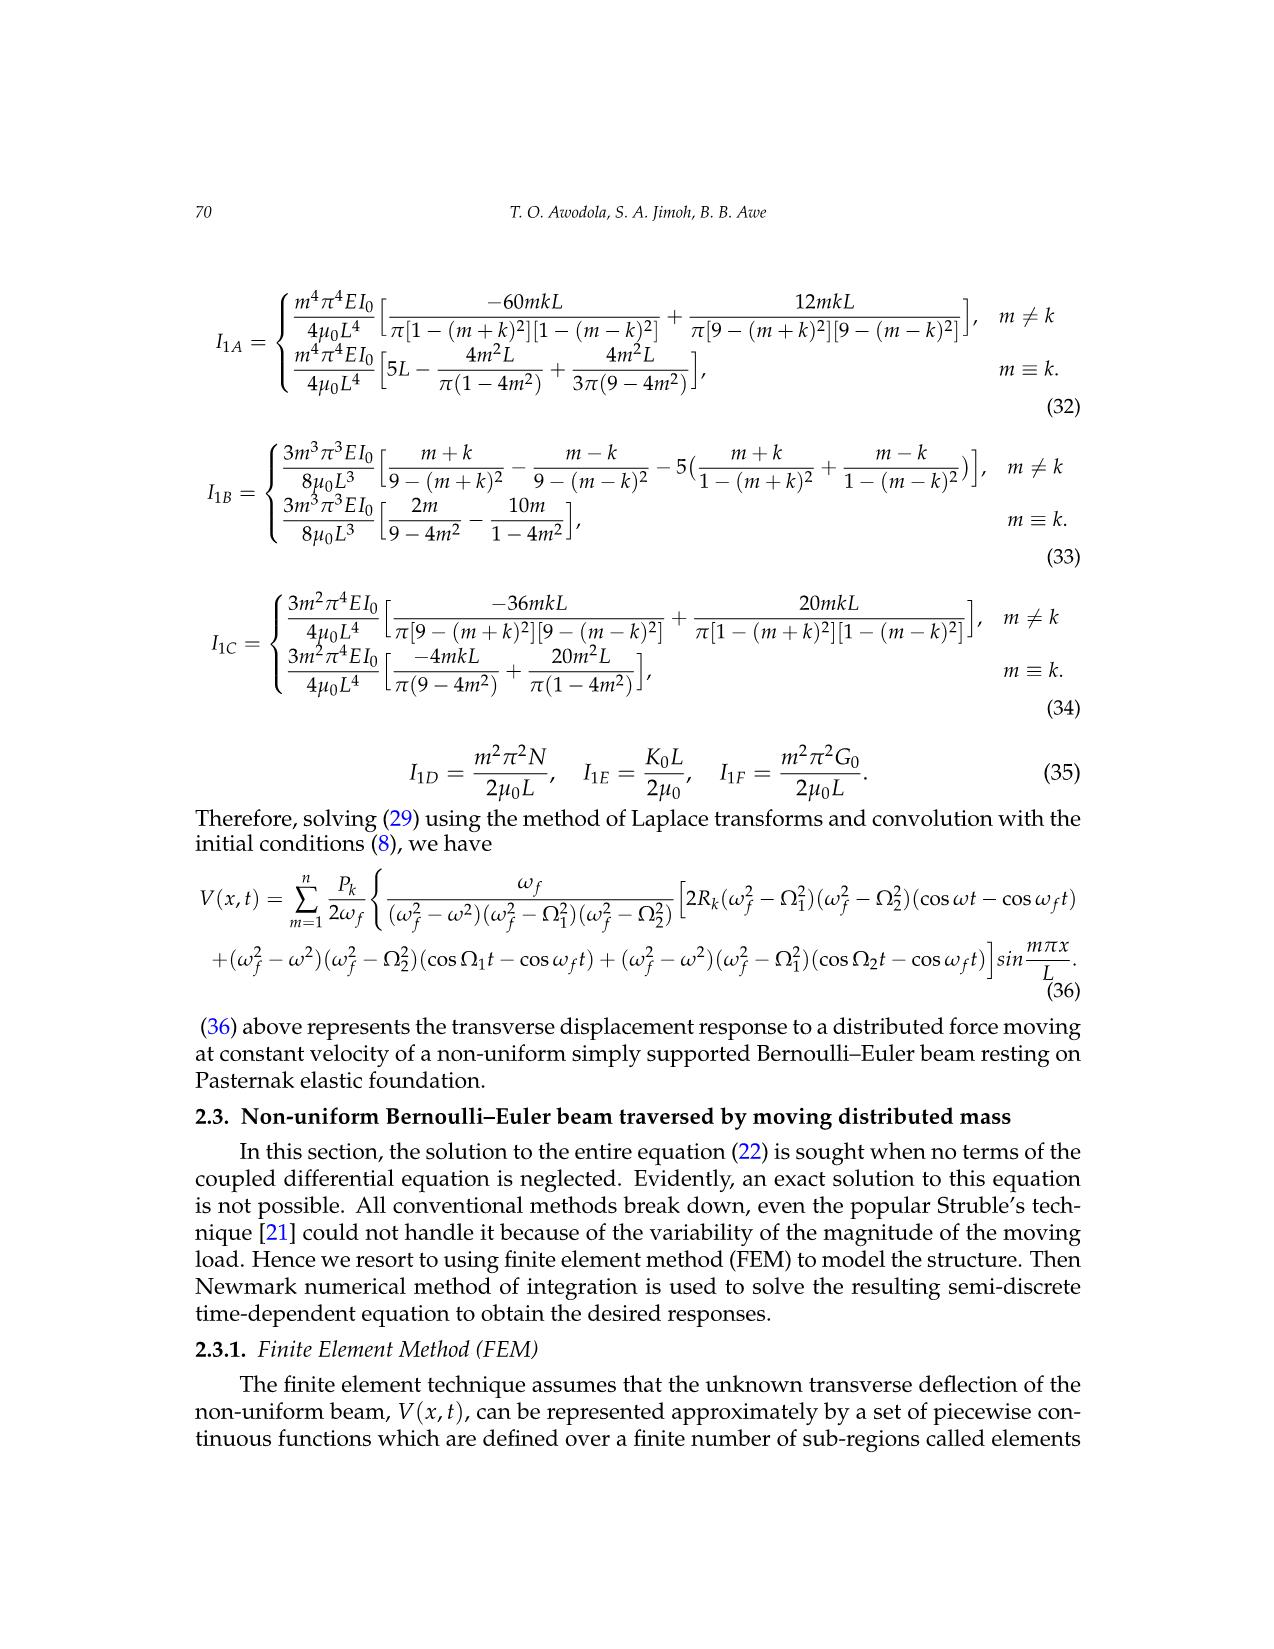 Vibration under variable magnitude moving distributed masses of non-uniform bernoulli–euler beam resting on pasternak elastic foundation trang 8